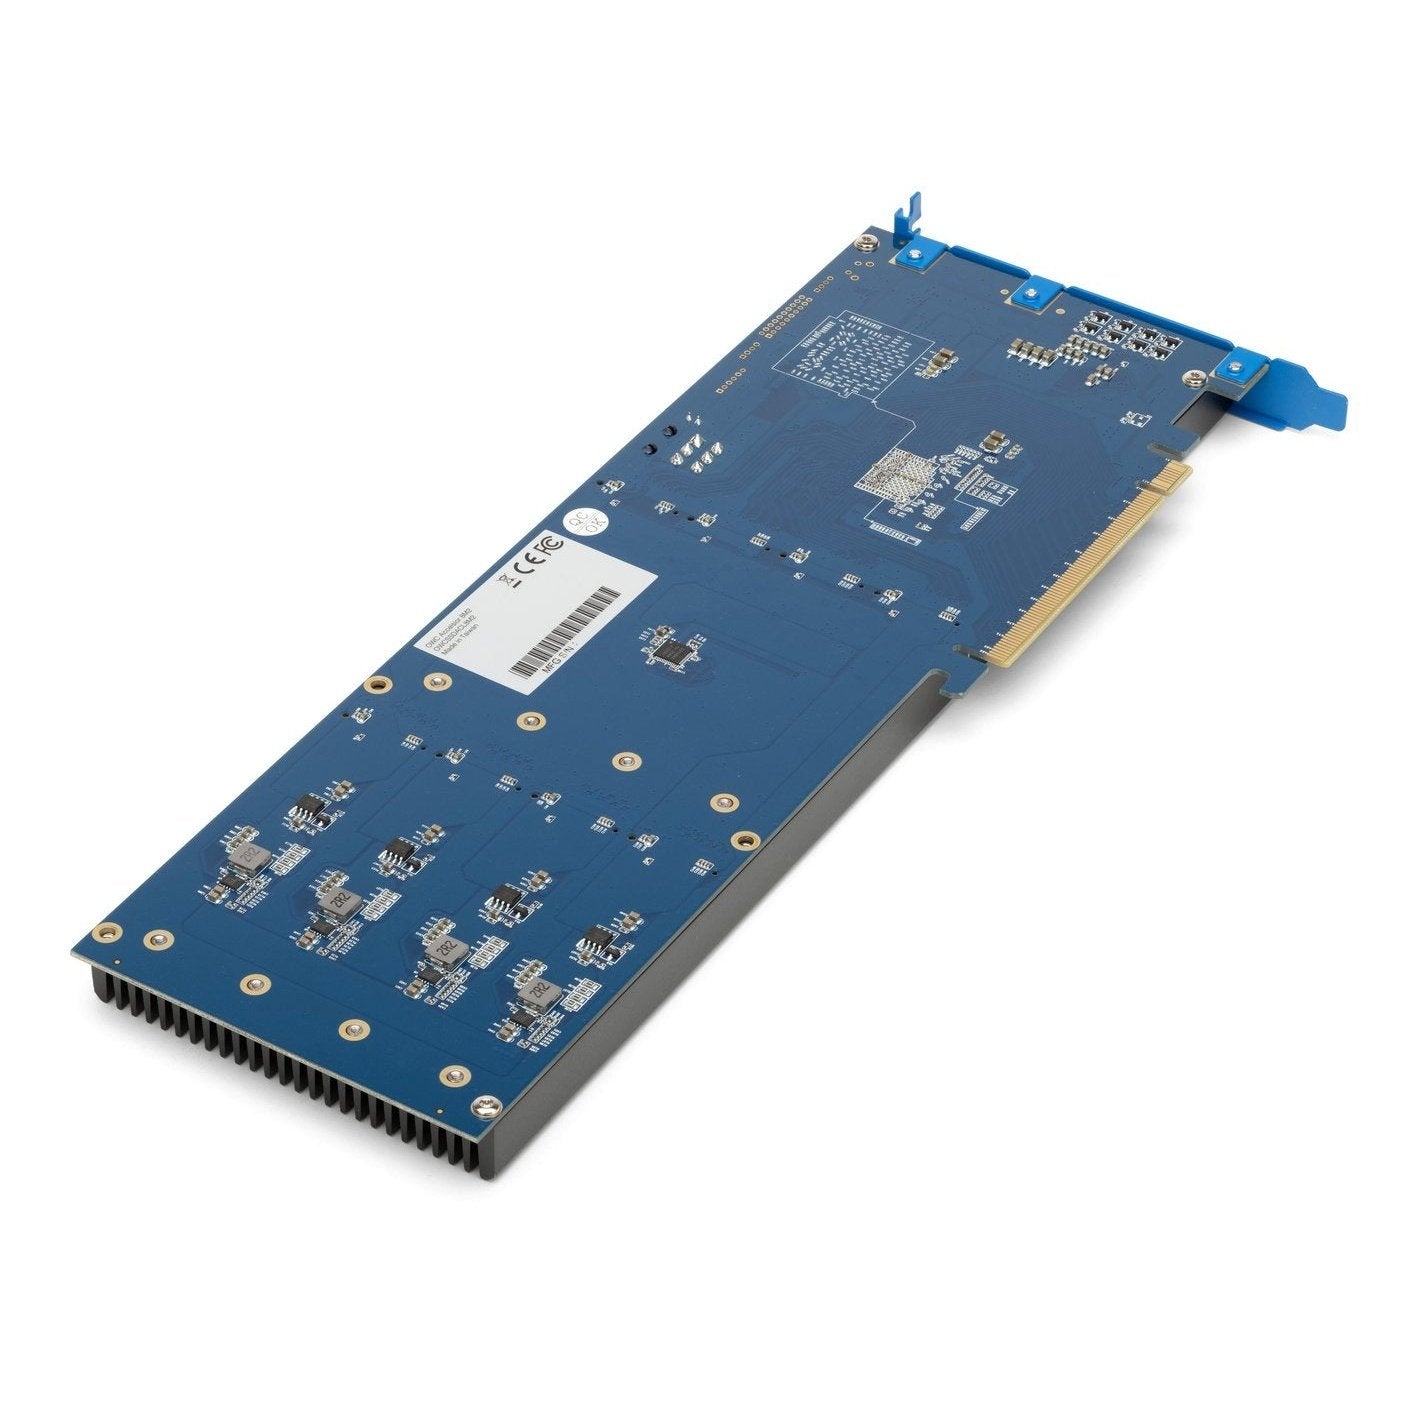 8.0TB OWC Accelsior 8M2 PCIe NVMe M.2 SSD Storage Solution